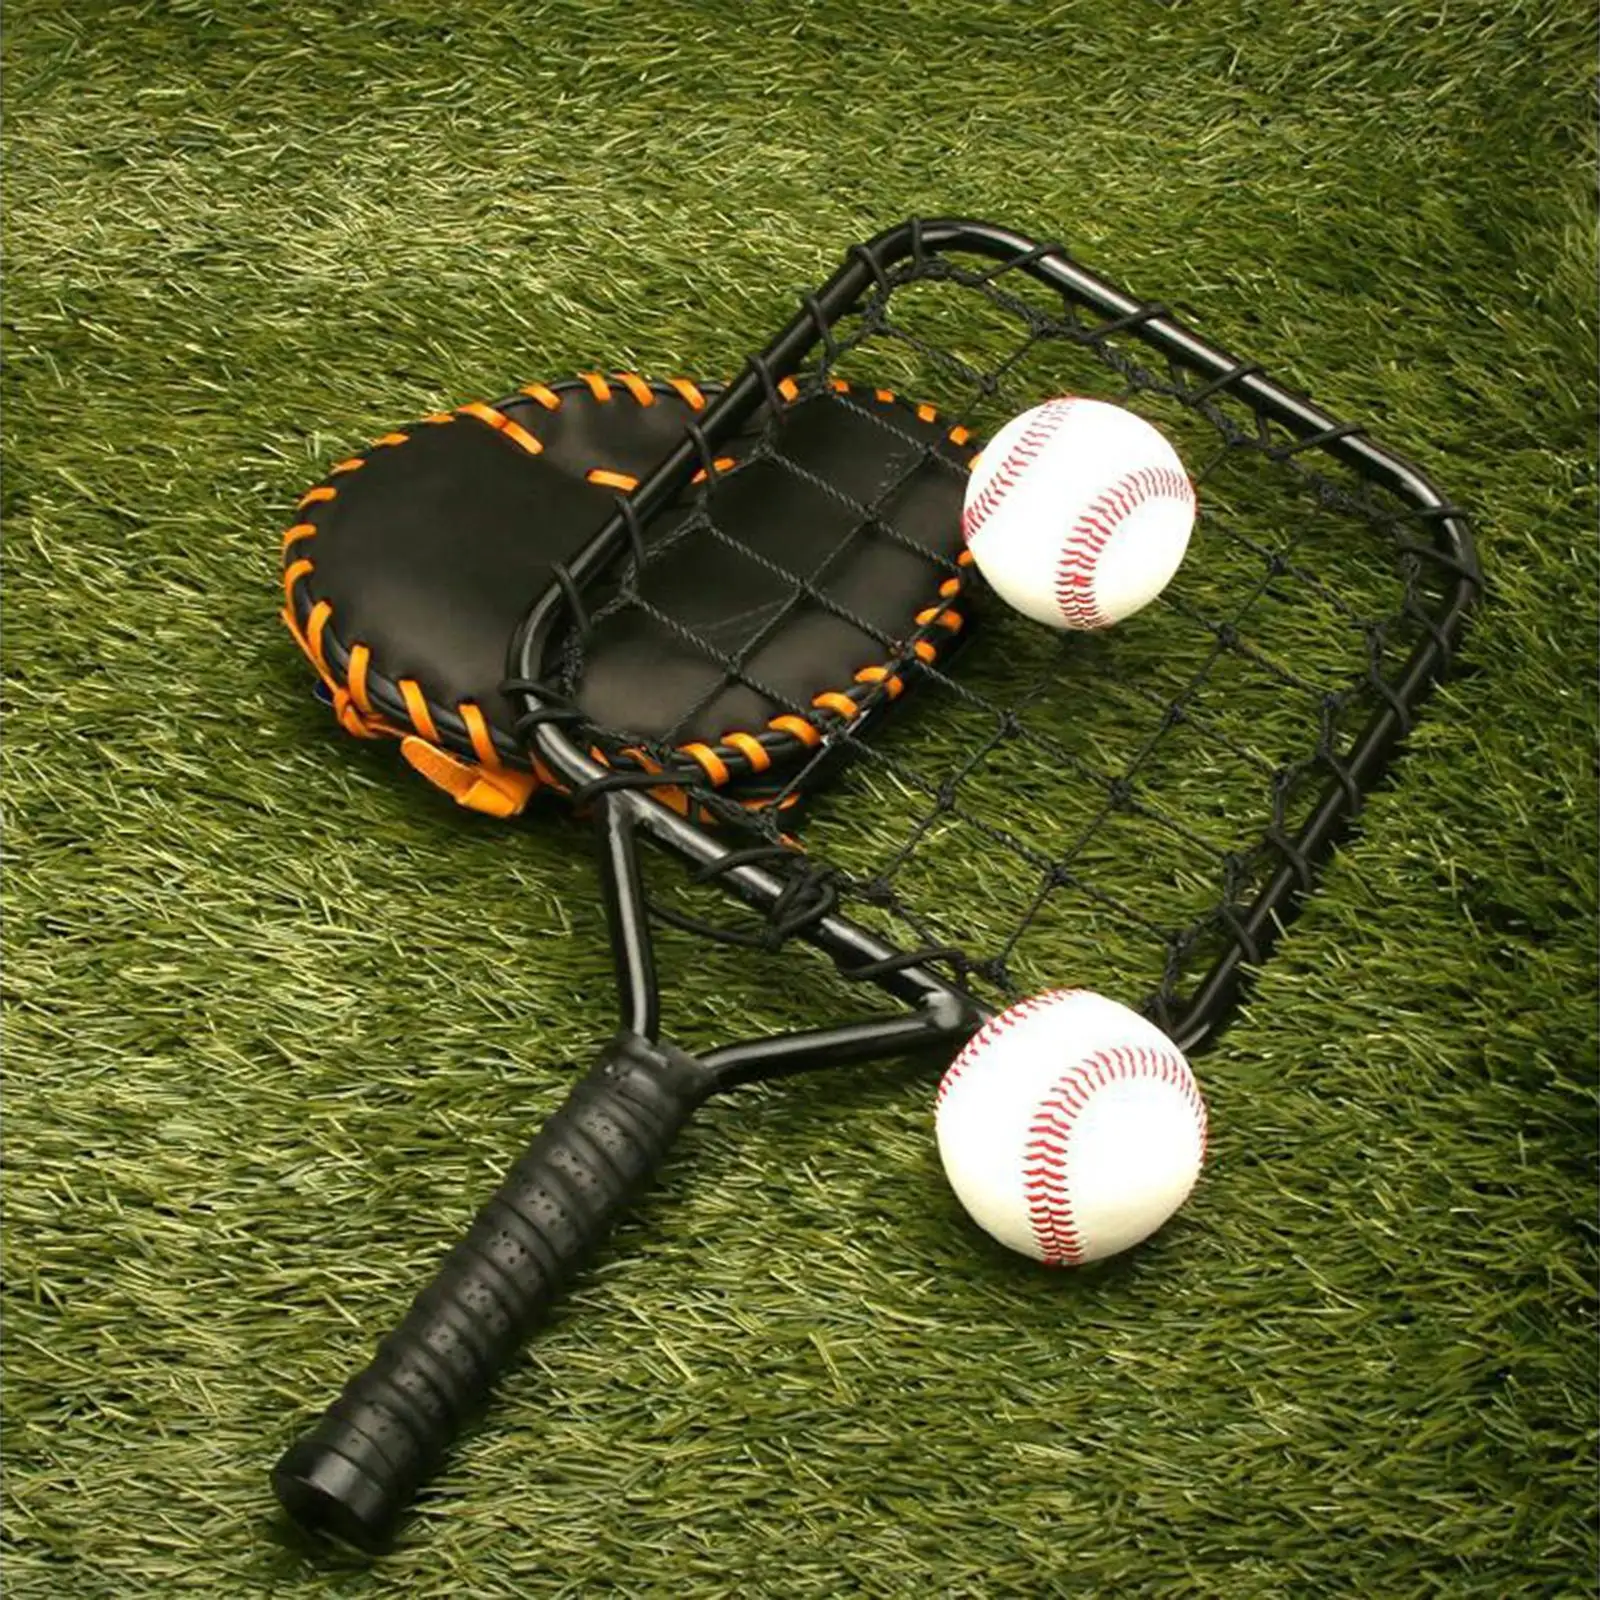 Baseball Racquet Ball Set Baseball Training Device Baseball Softball Racquet